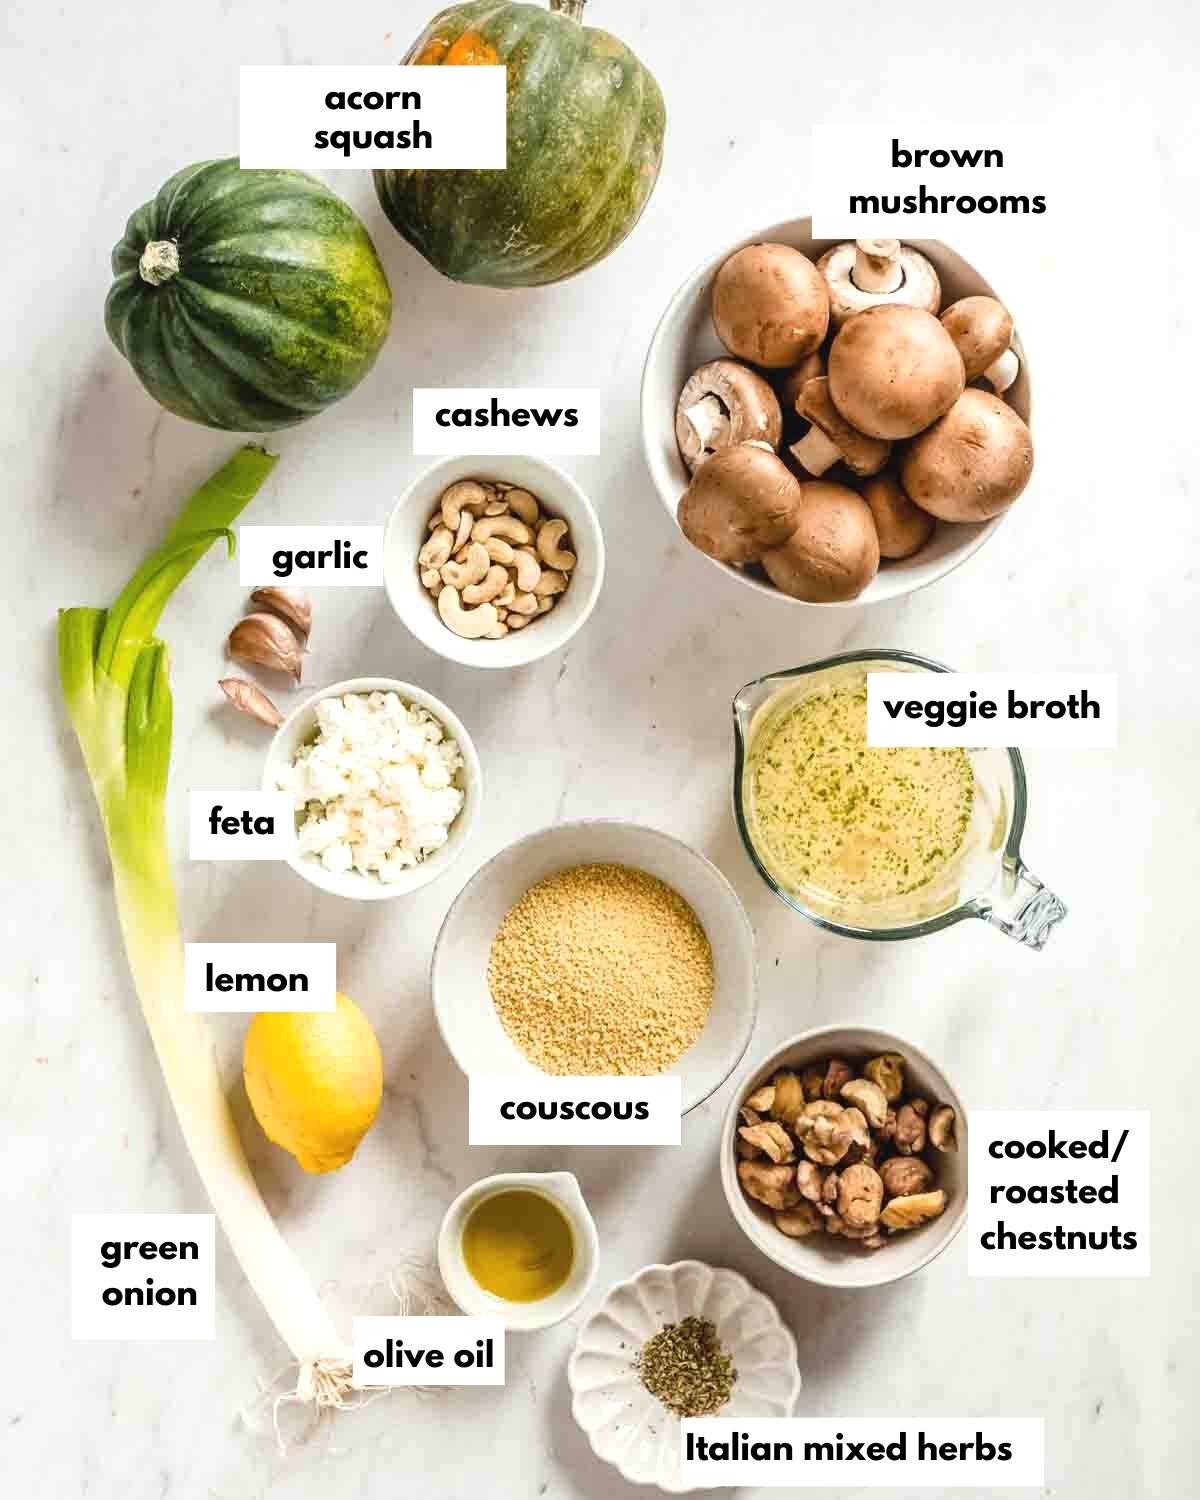 all ingredients for vegetarian stuffed acorn squash.